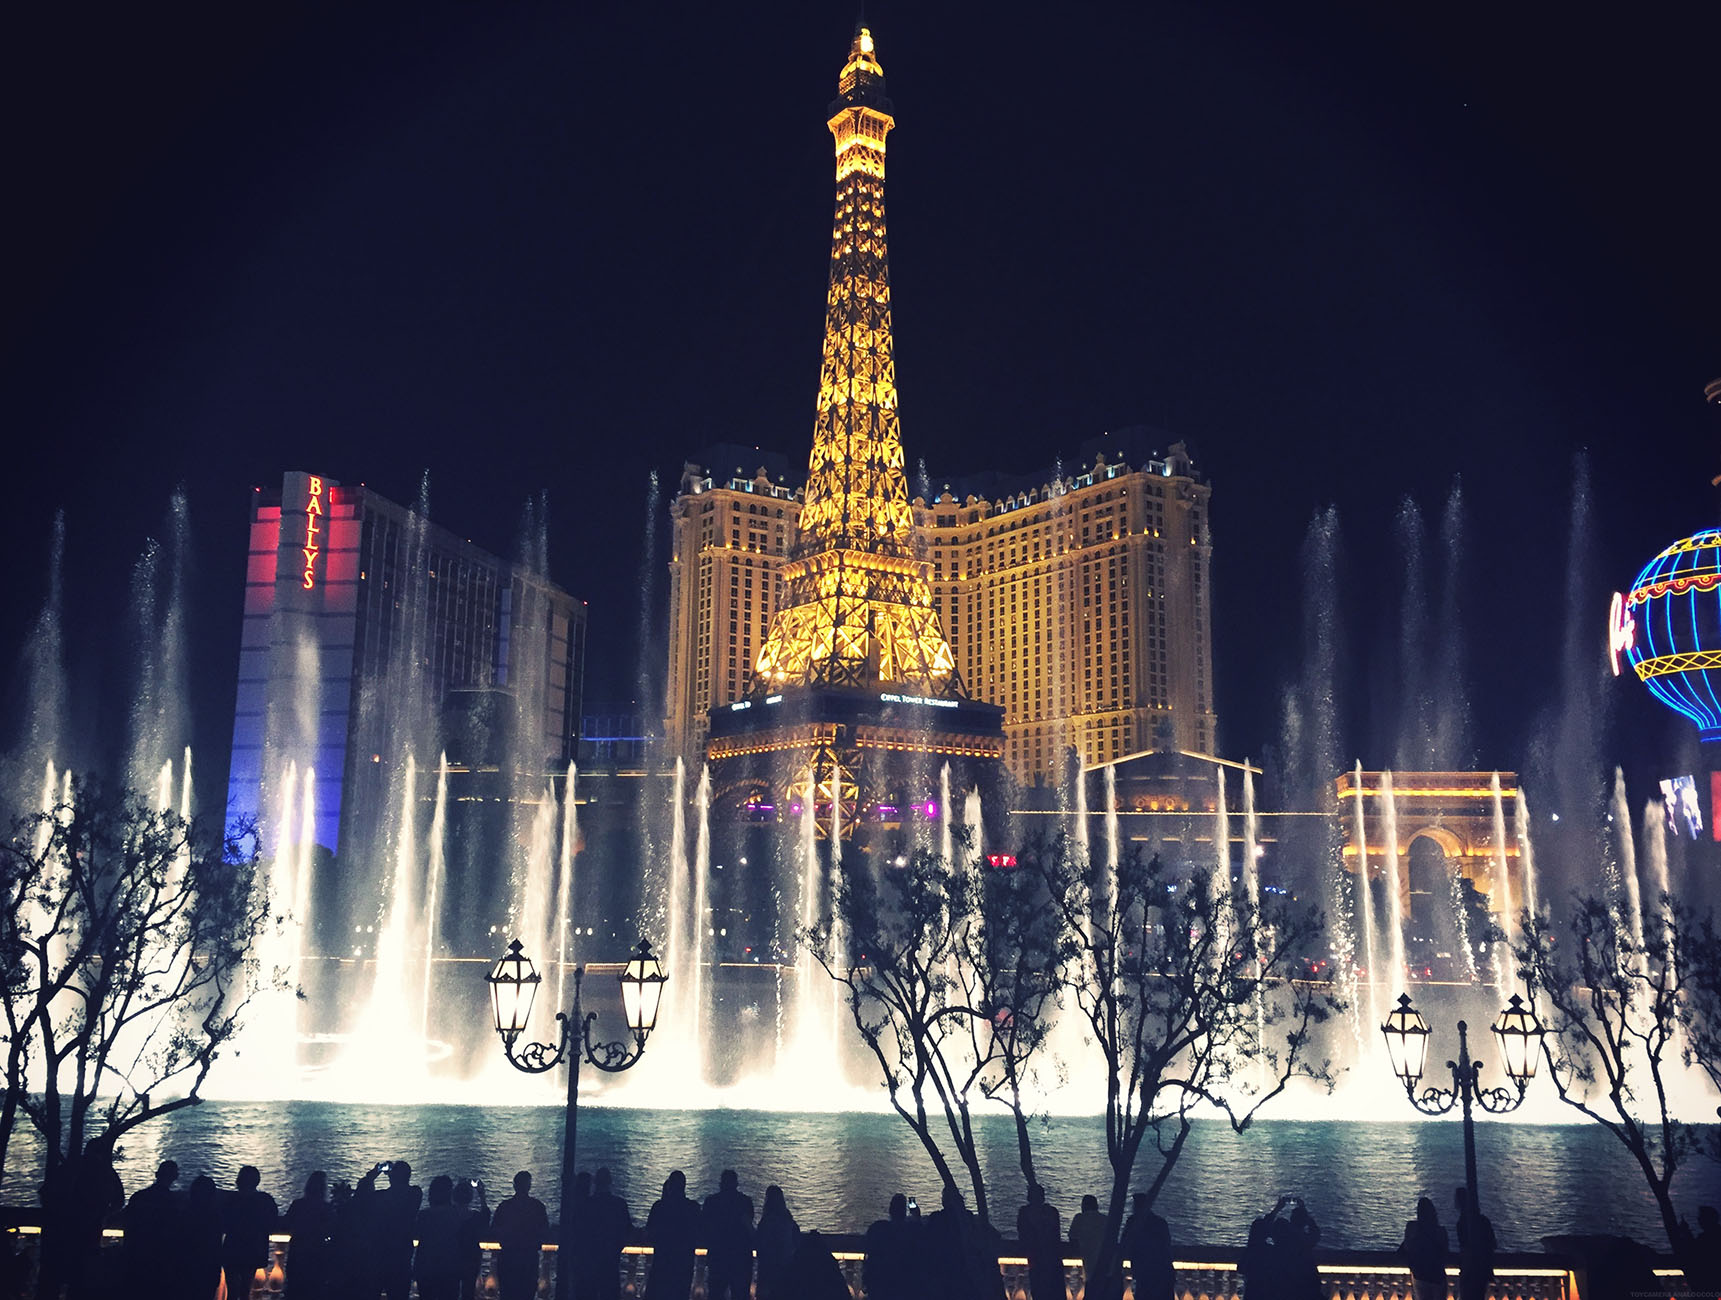 Bellagio Hotel Fontaines Casino Las Vegas Nevada Tour Eiffel by night